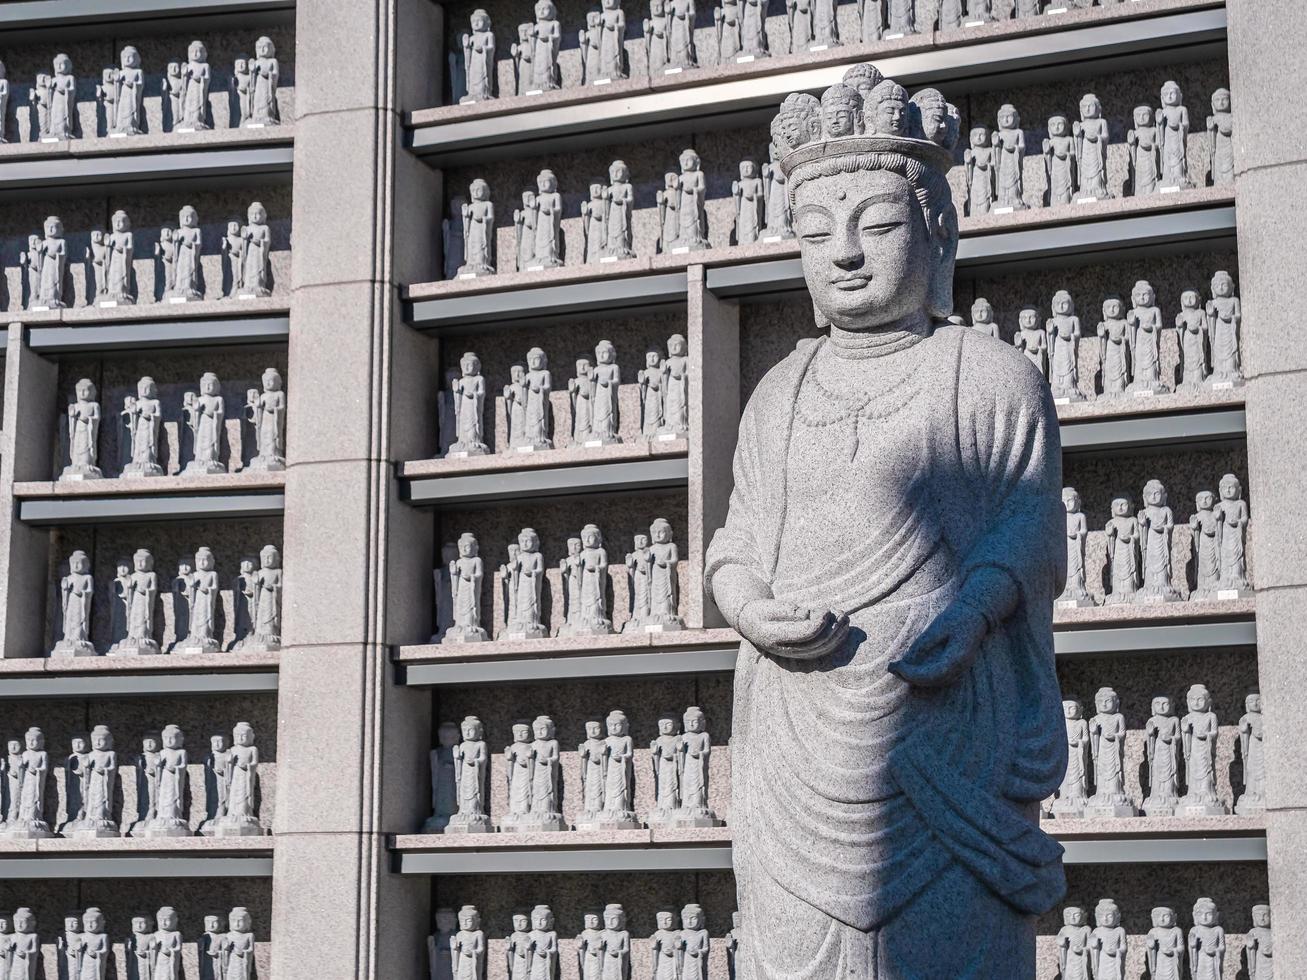 Buddhist statue in Bongeunsa Temple at Seoul City, South Korea photo